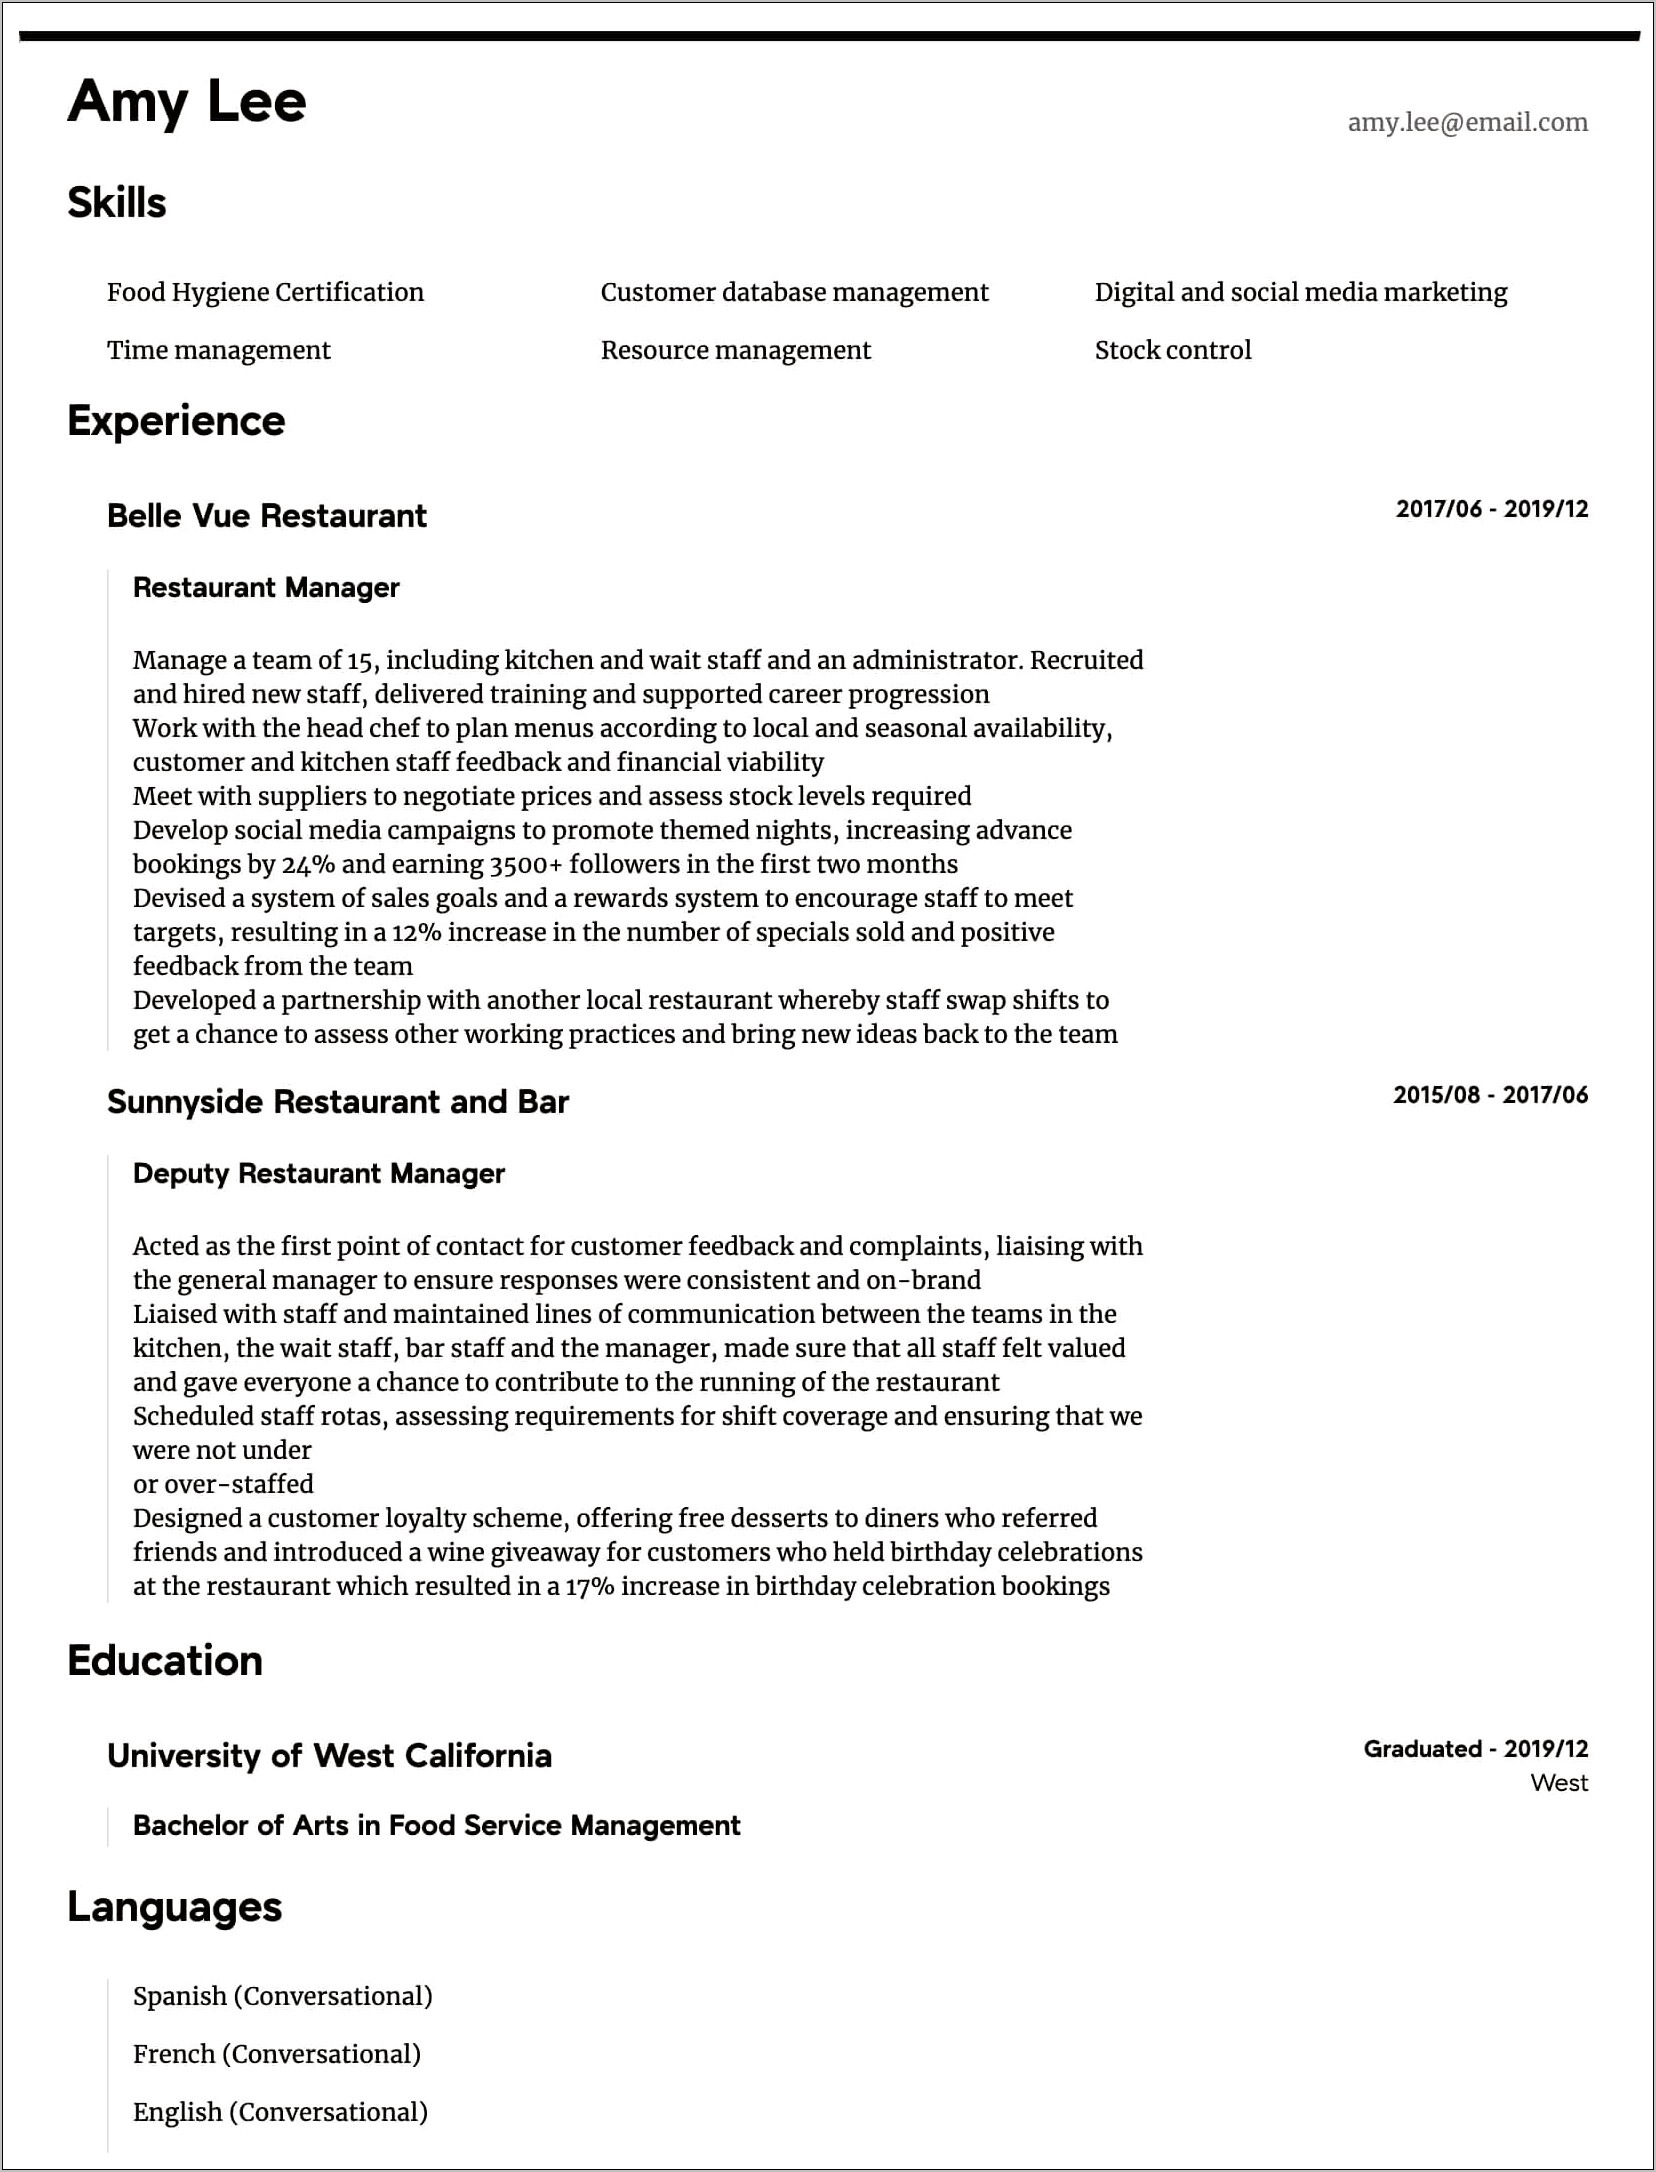 Resume Job Description Restaurant Manager